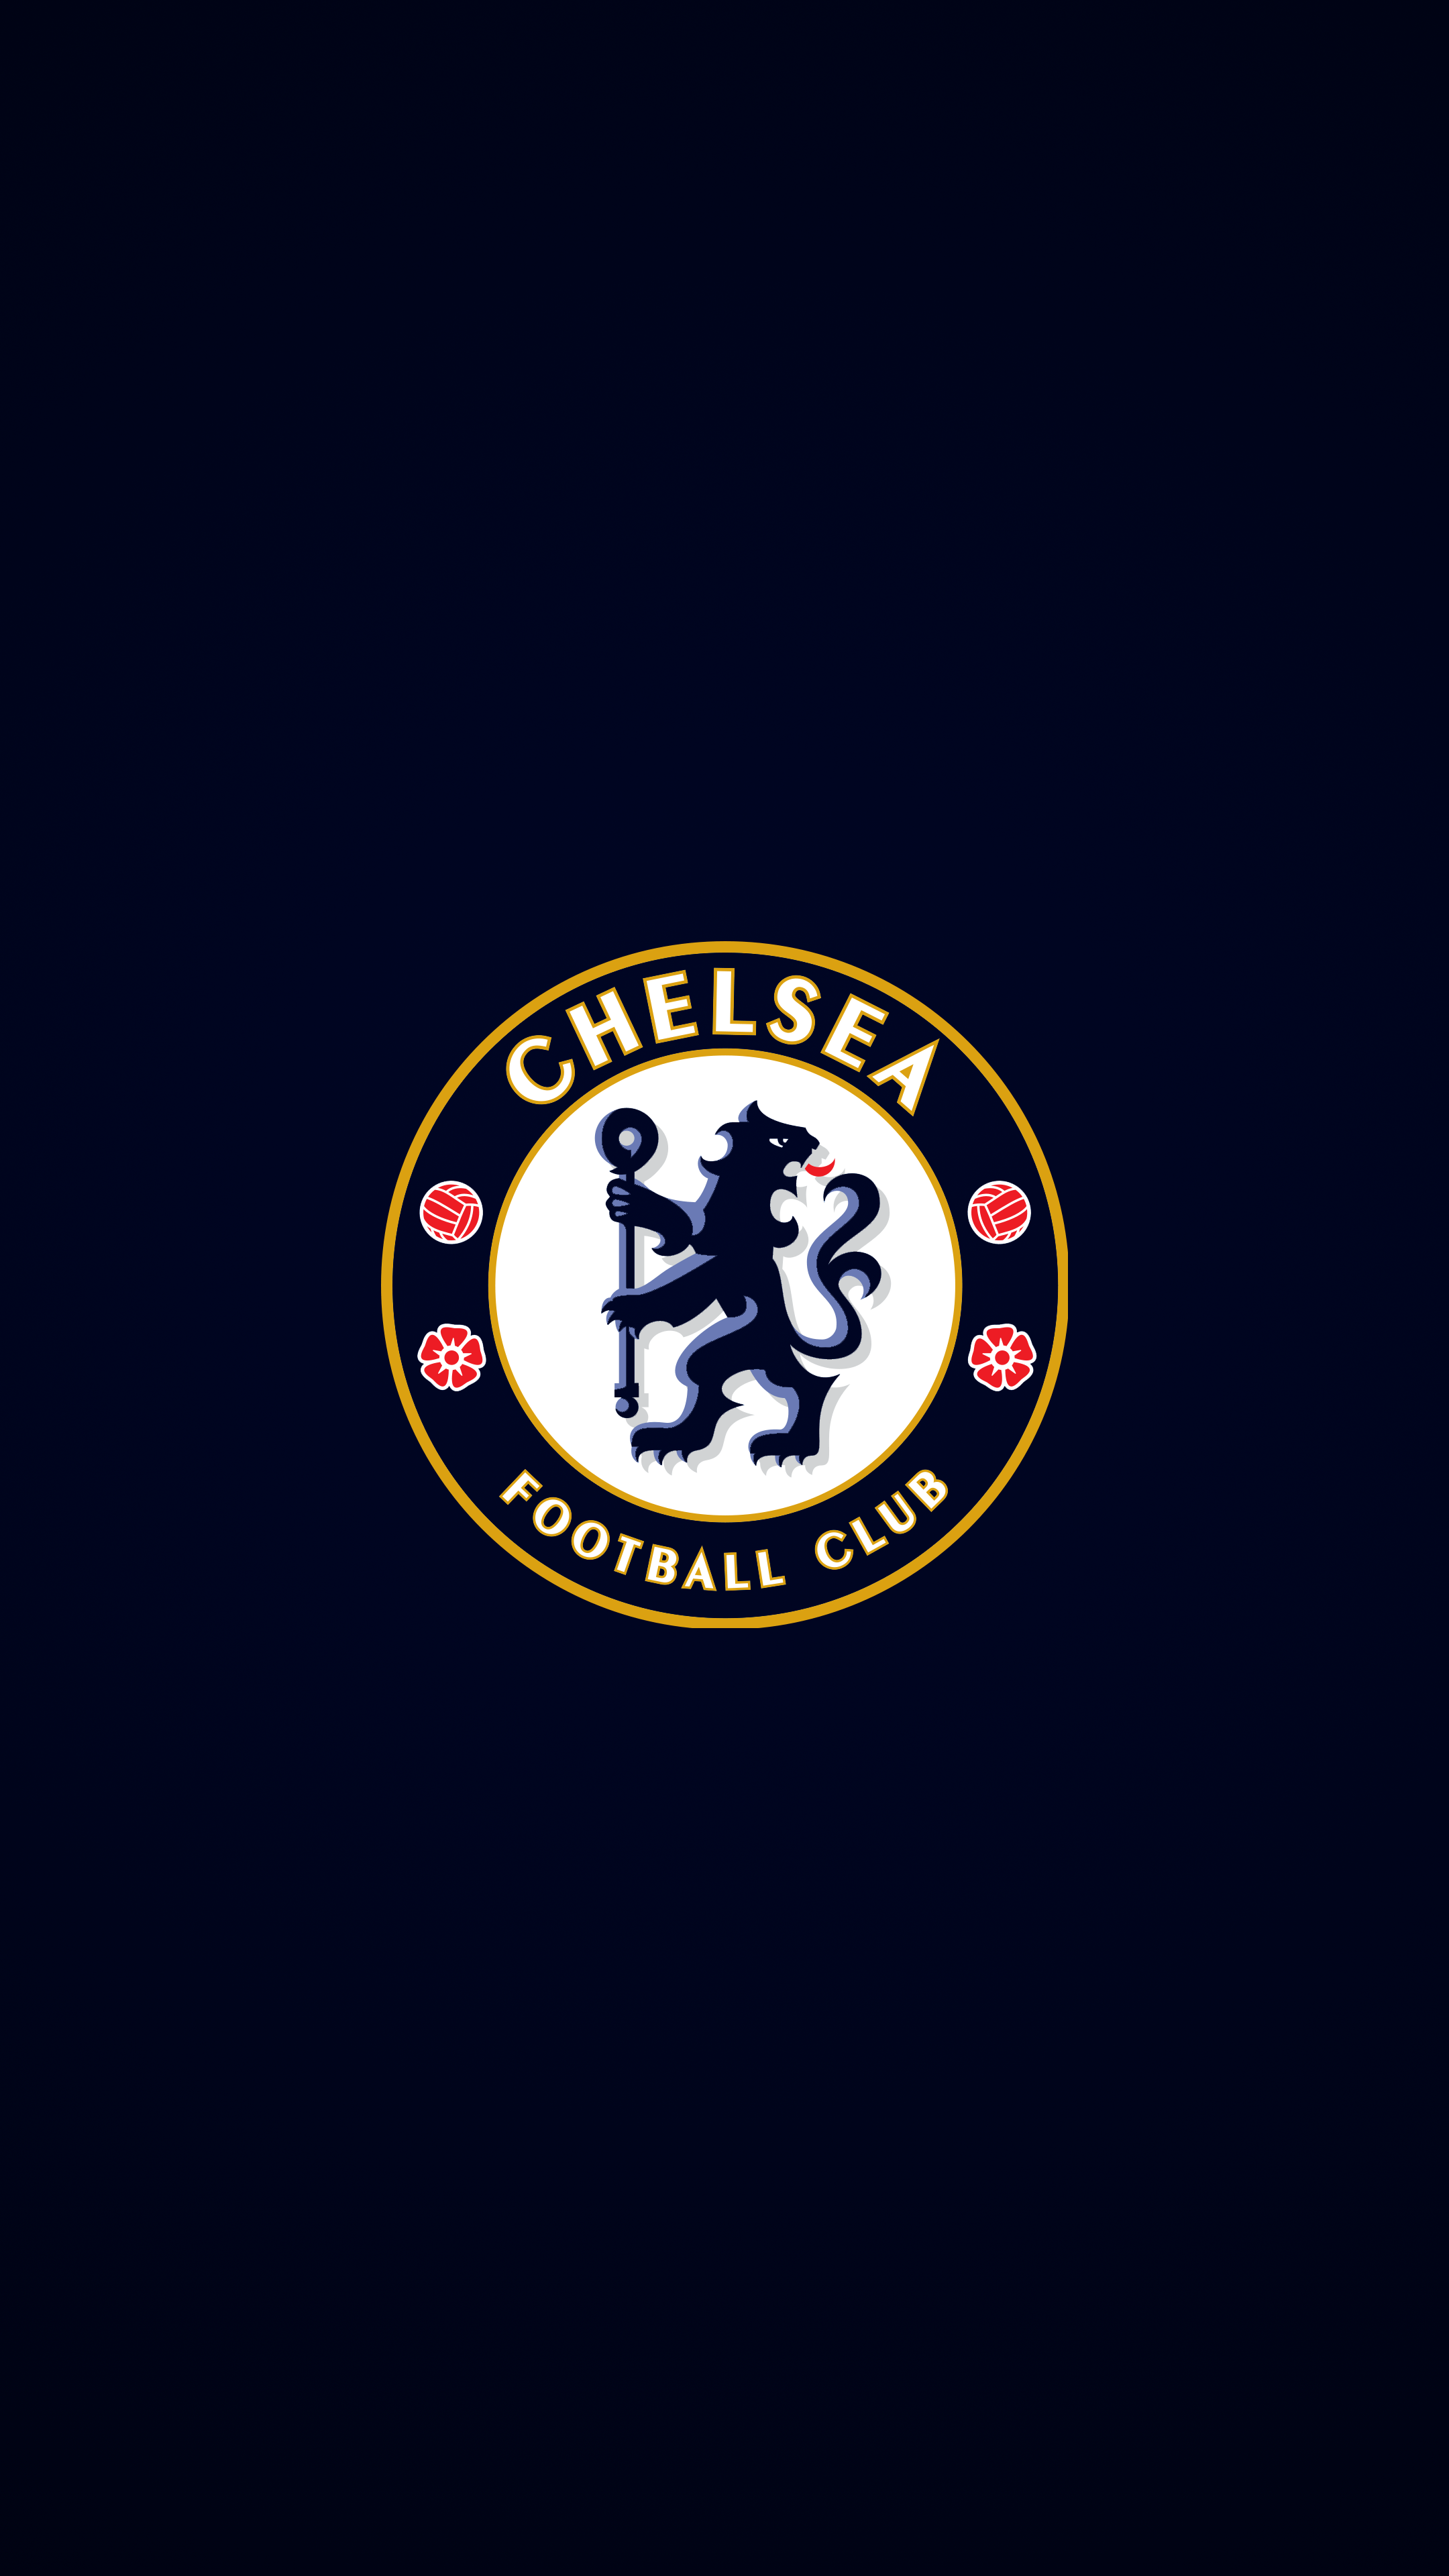 Chelsea football club wallpaper ideas. chelsea football club wallpaper, chelsea football, chelsea football club